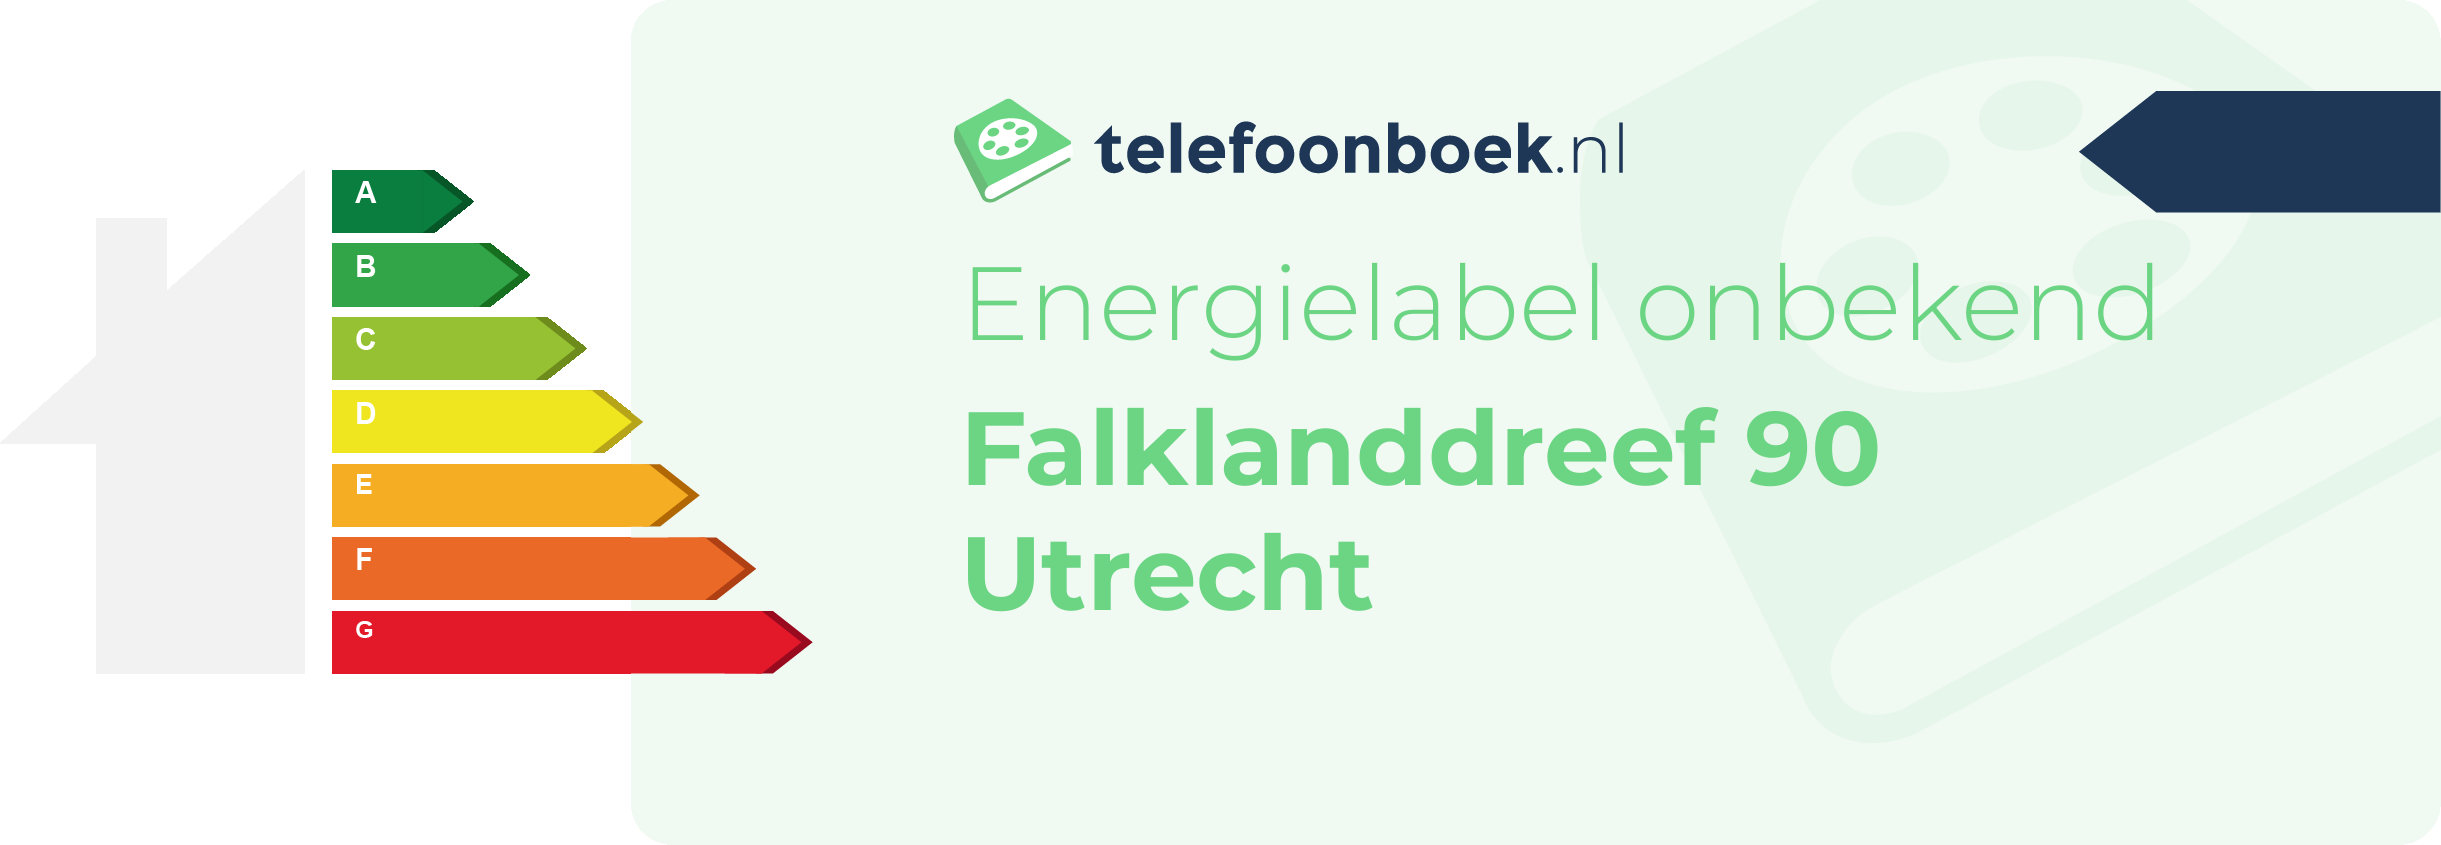 Energielabel Falklanddreef 90 Utrecht